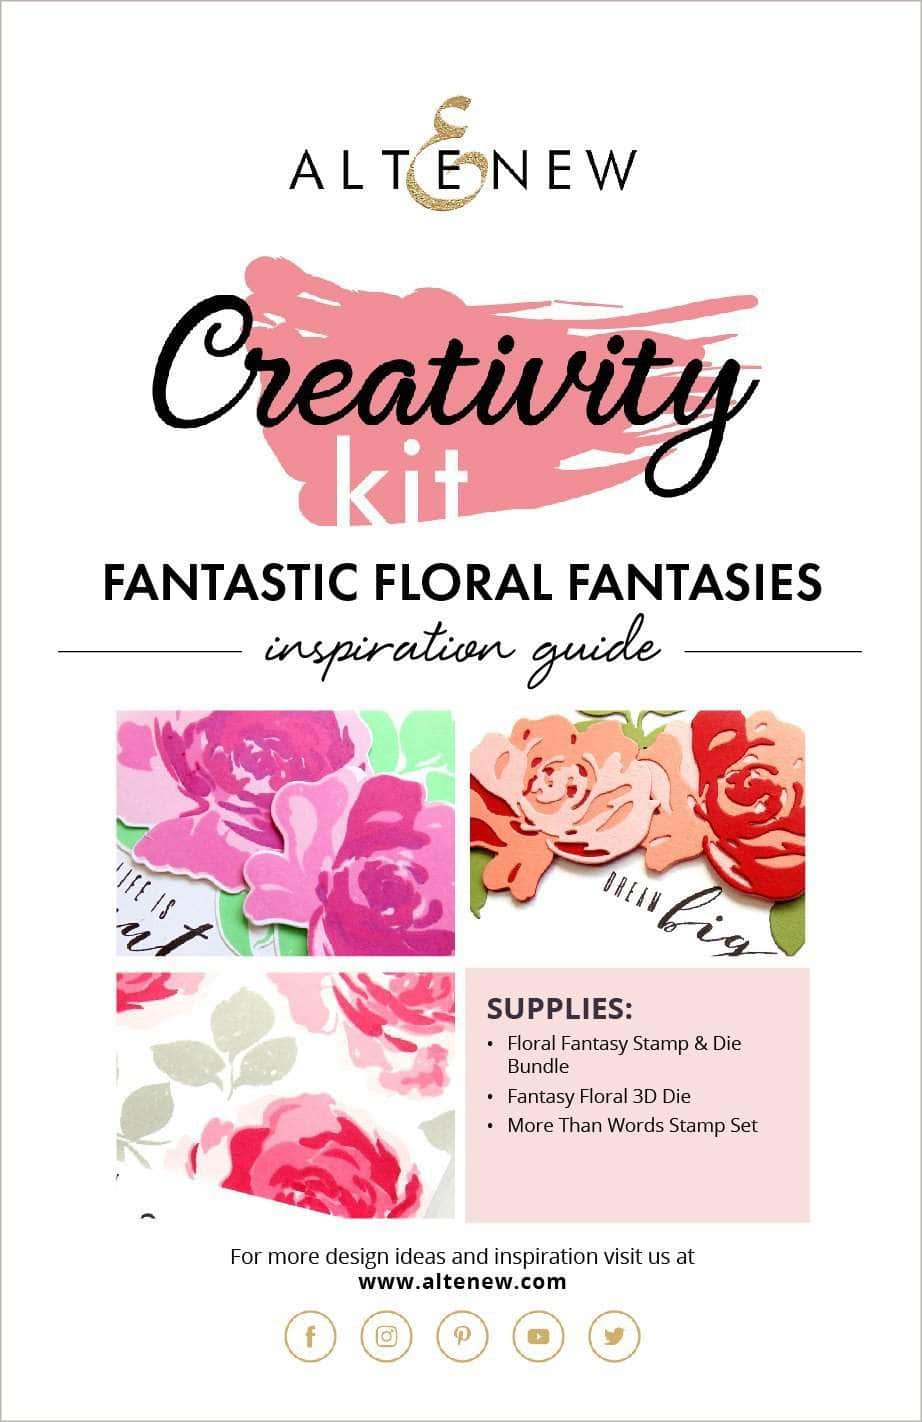 Printed Media Fantastic Floral Fantasies Creativity Kit Inspiration Guide